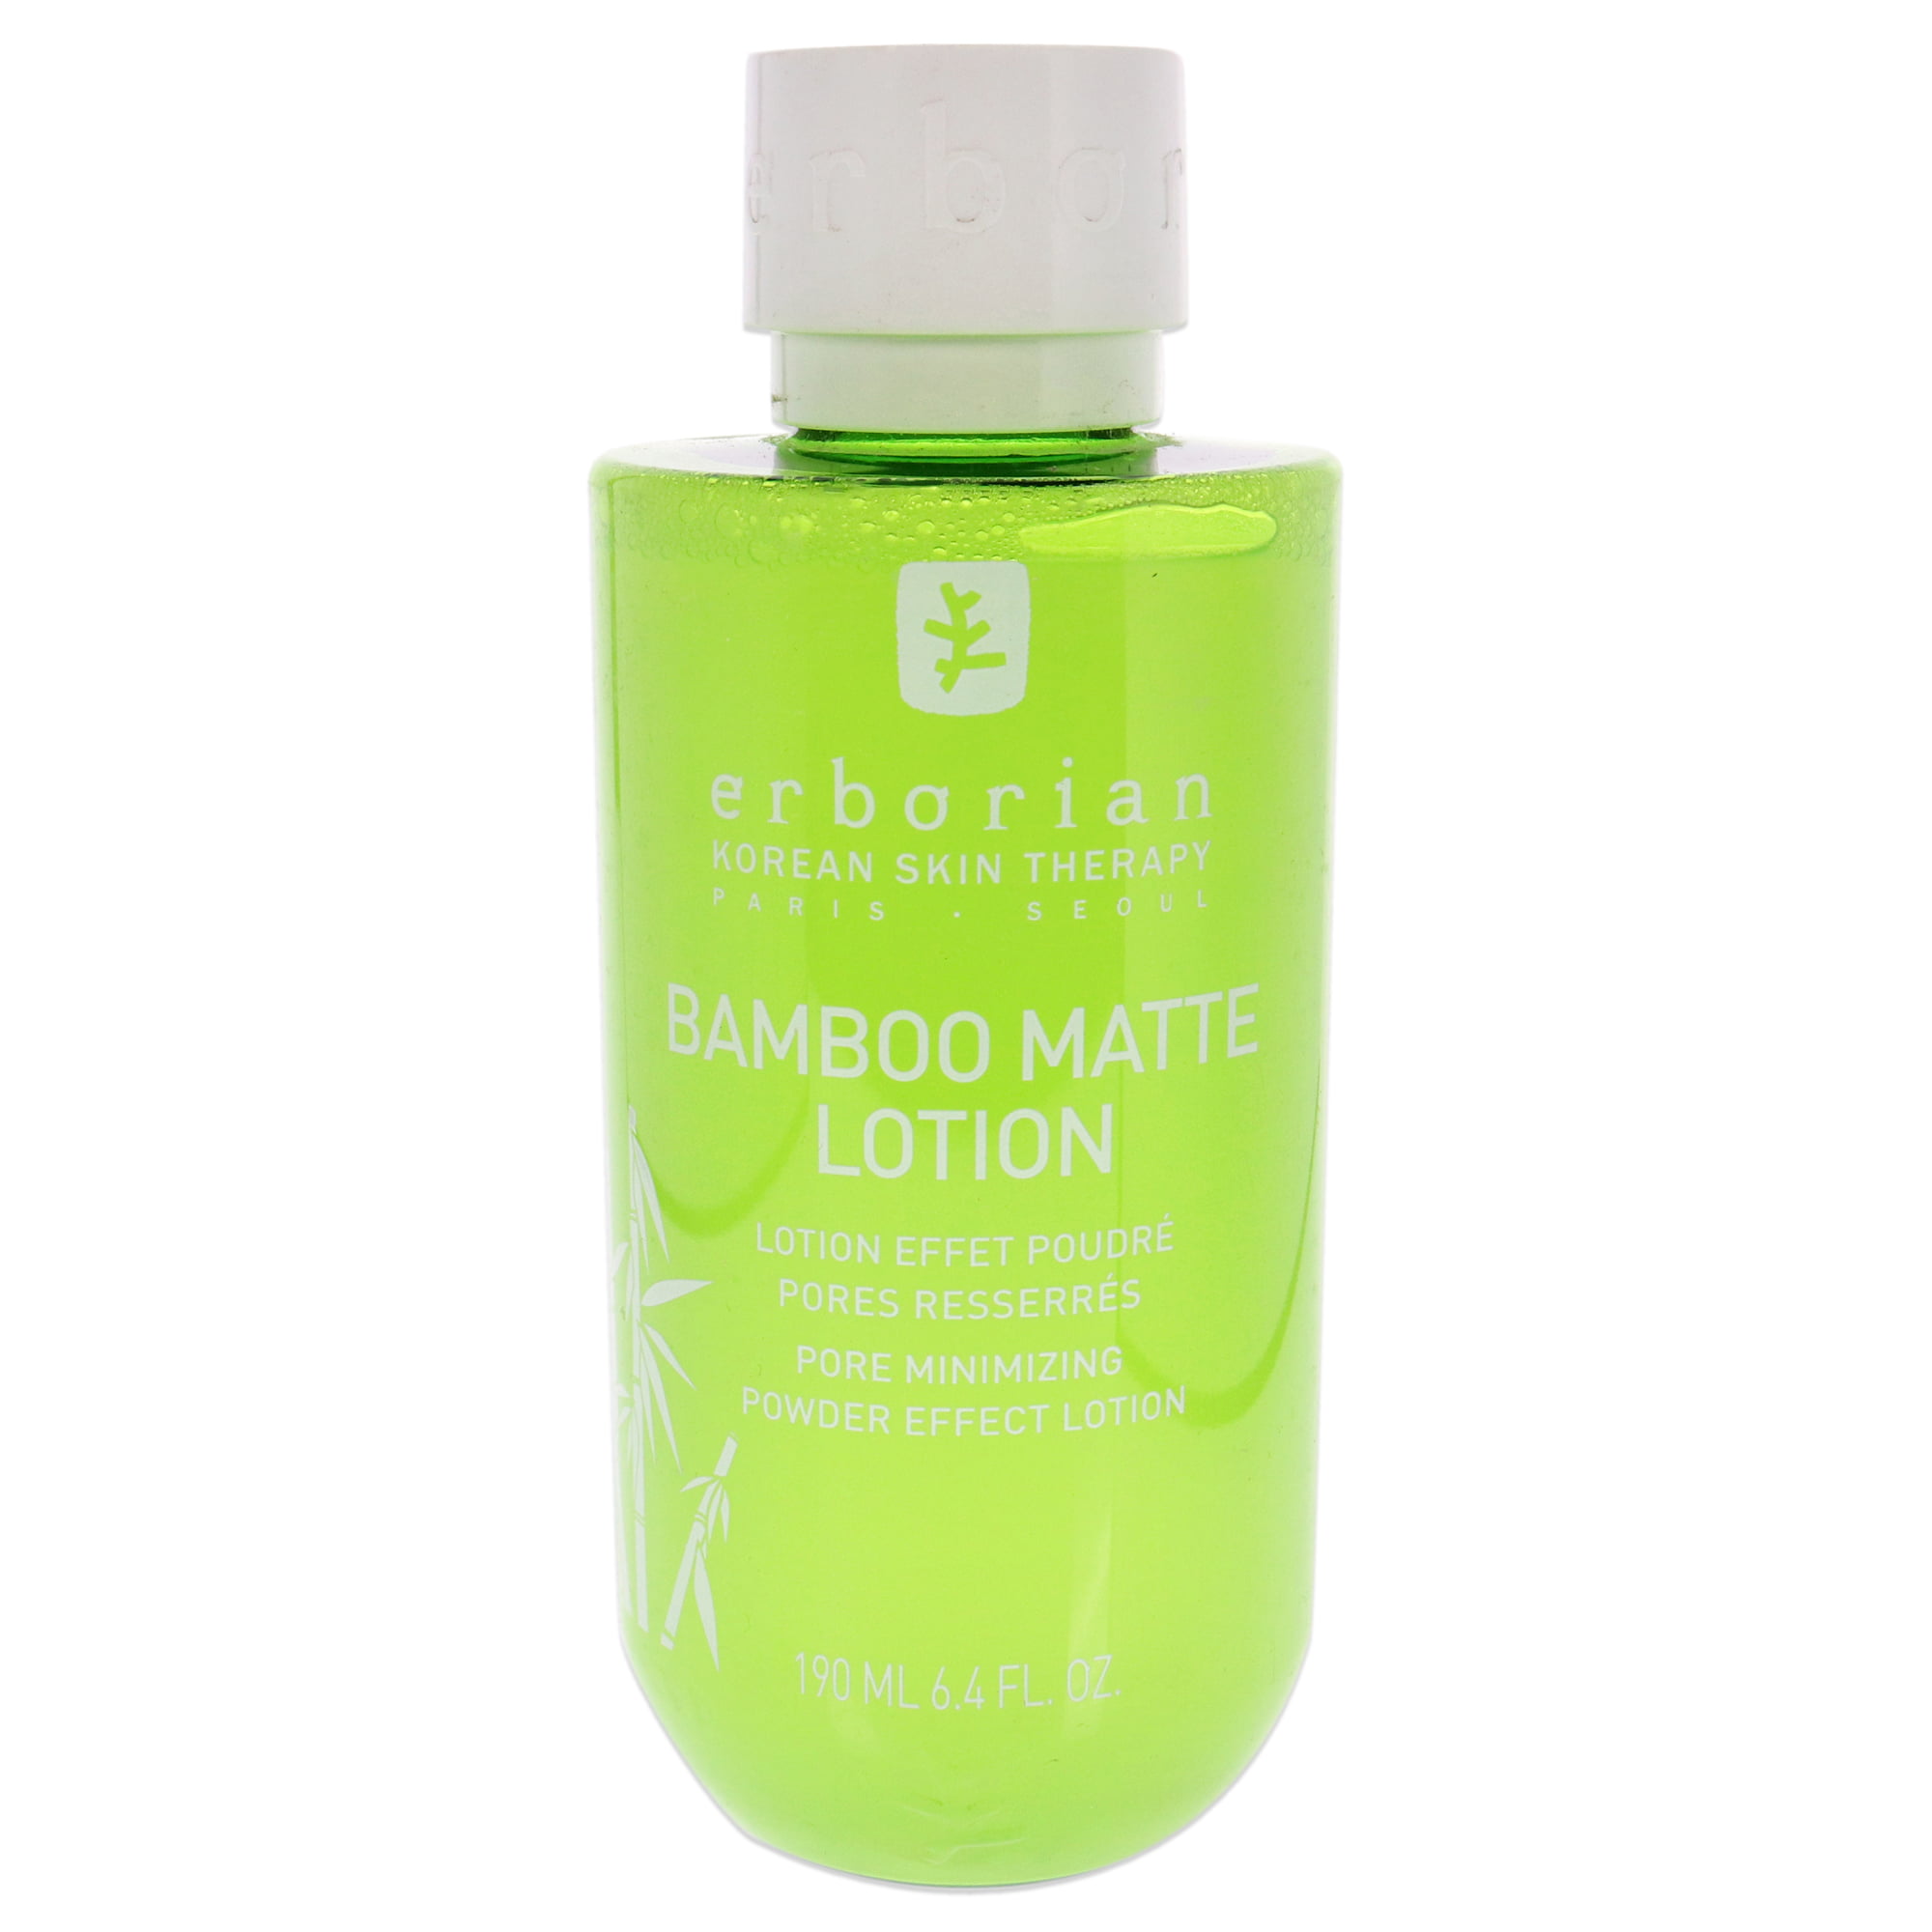 Oeps Decimale pijnlijk Erborian Bamboo Matte Lotion , 6.4 oz Treatment - Walmart.com